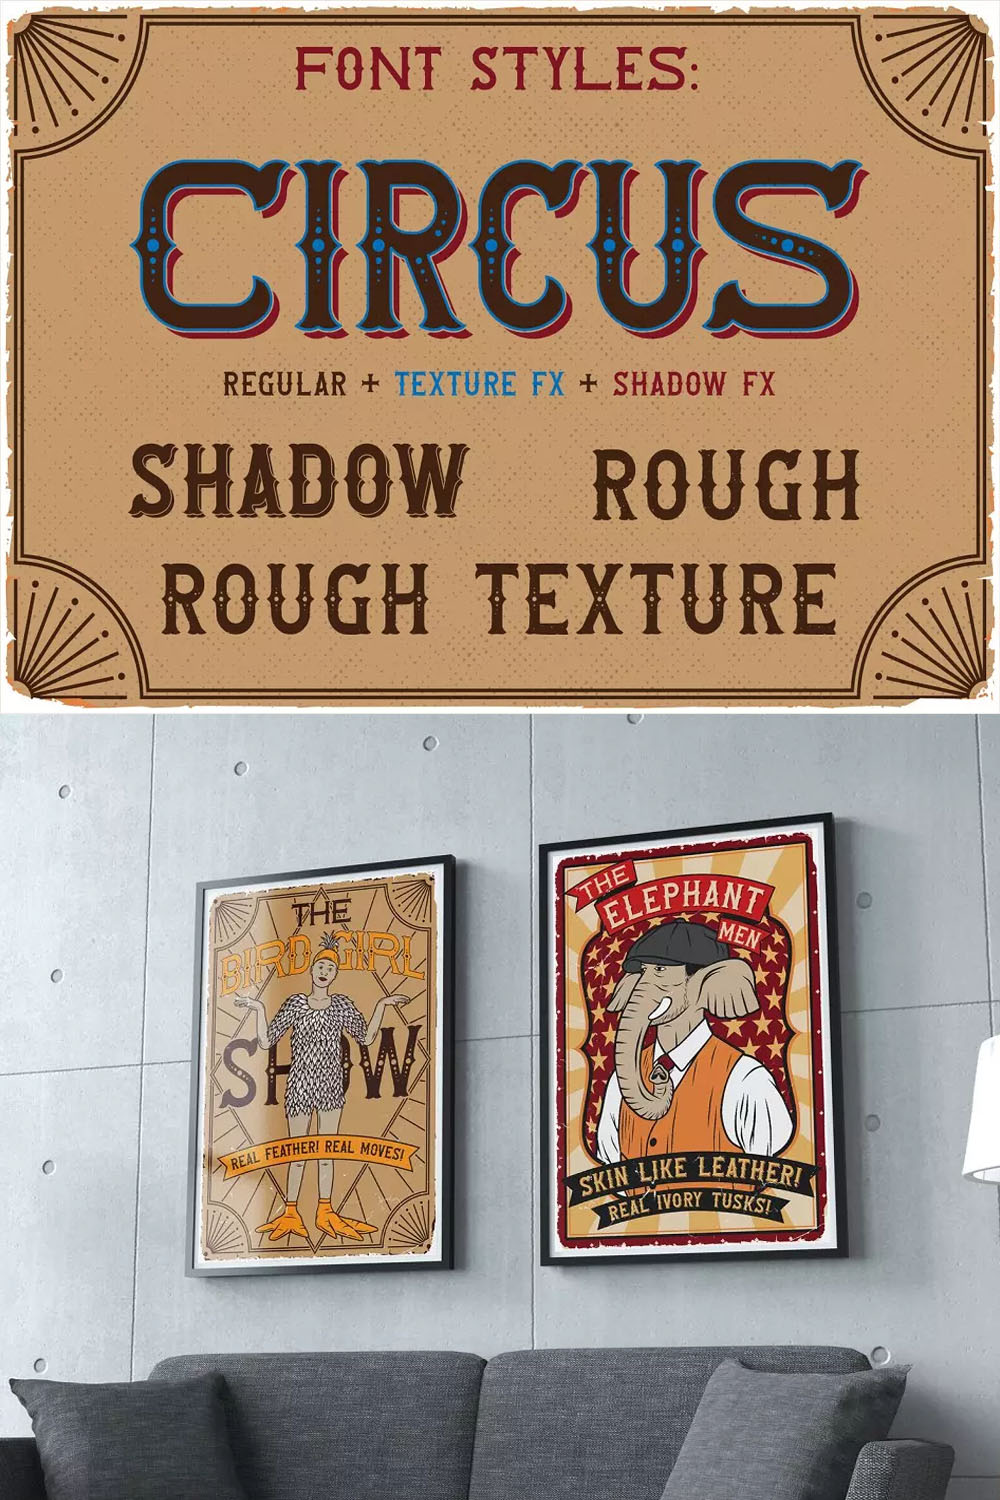 Circus Sideshow Vintage Fonts pinterest image.